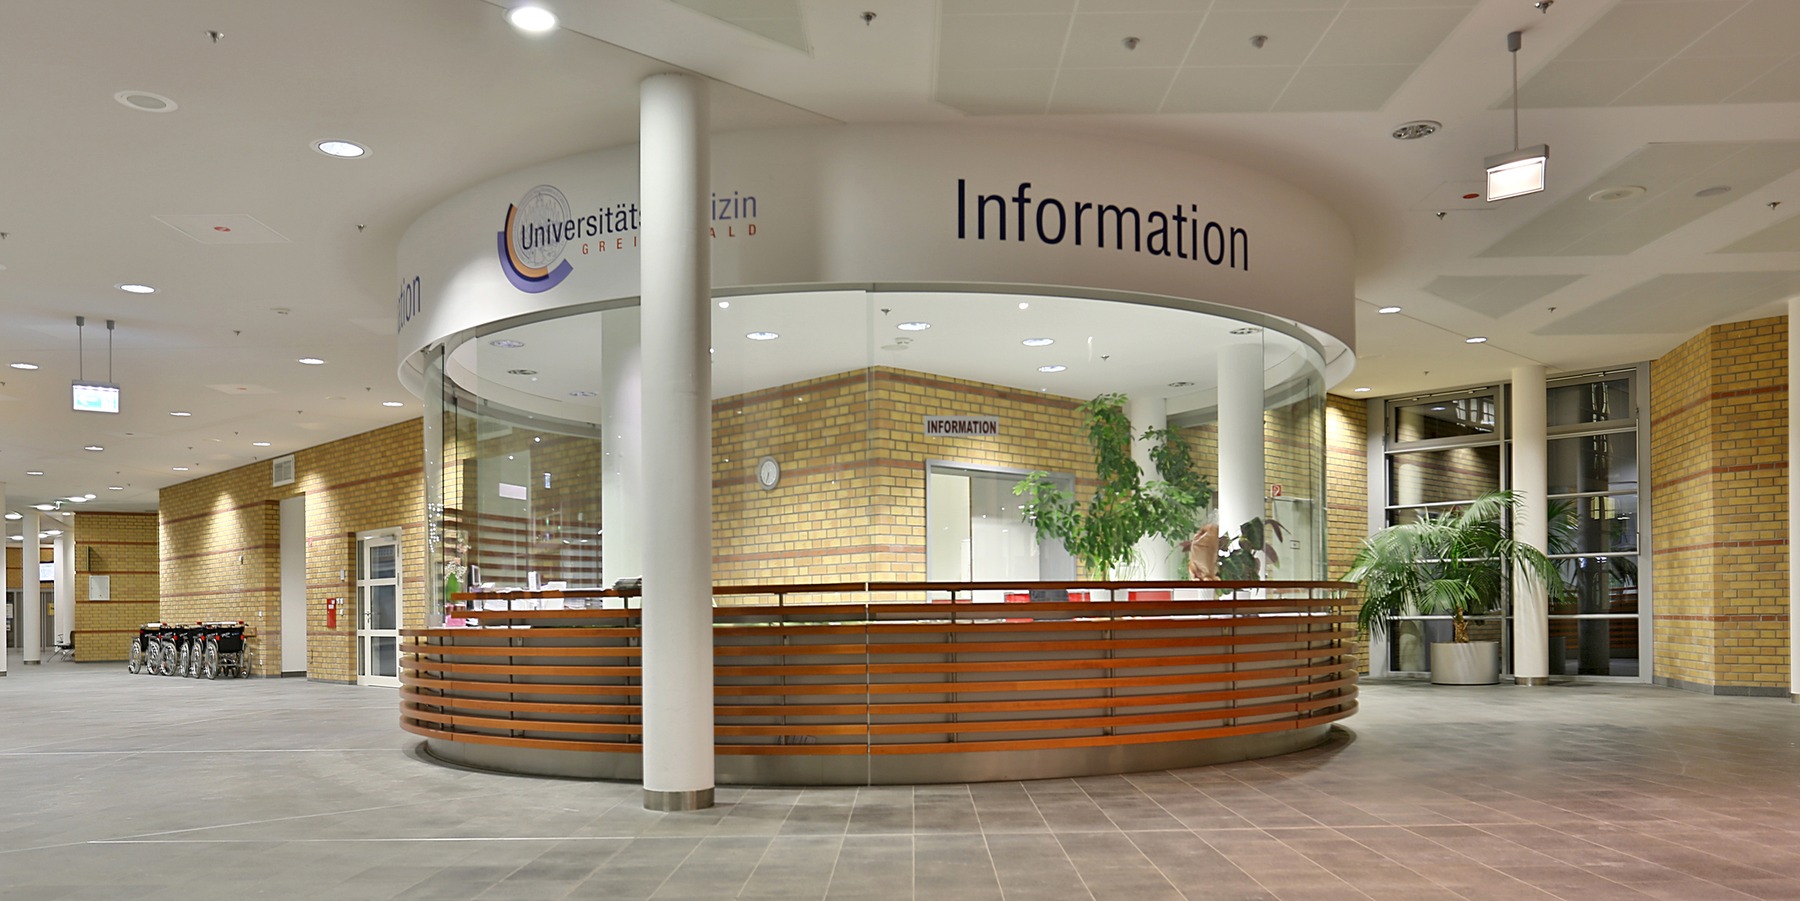 Patienten- und Besucher-Information im Eingangsbereich Erdgeschoss © 2013 HWP Planungsgesellschaft mbH, Stuttgart